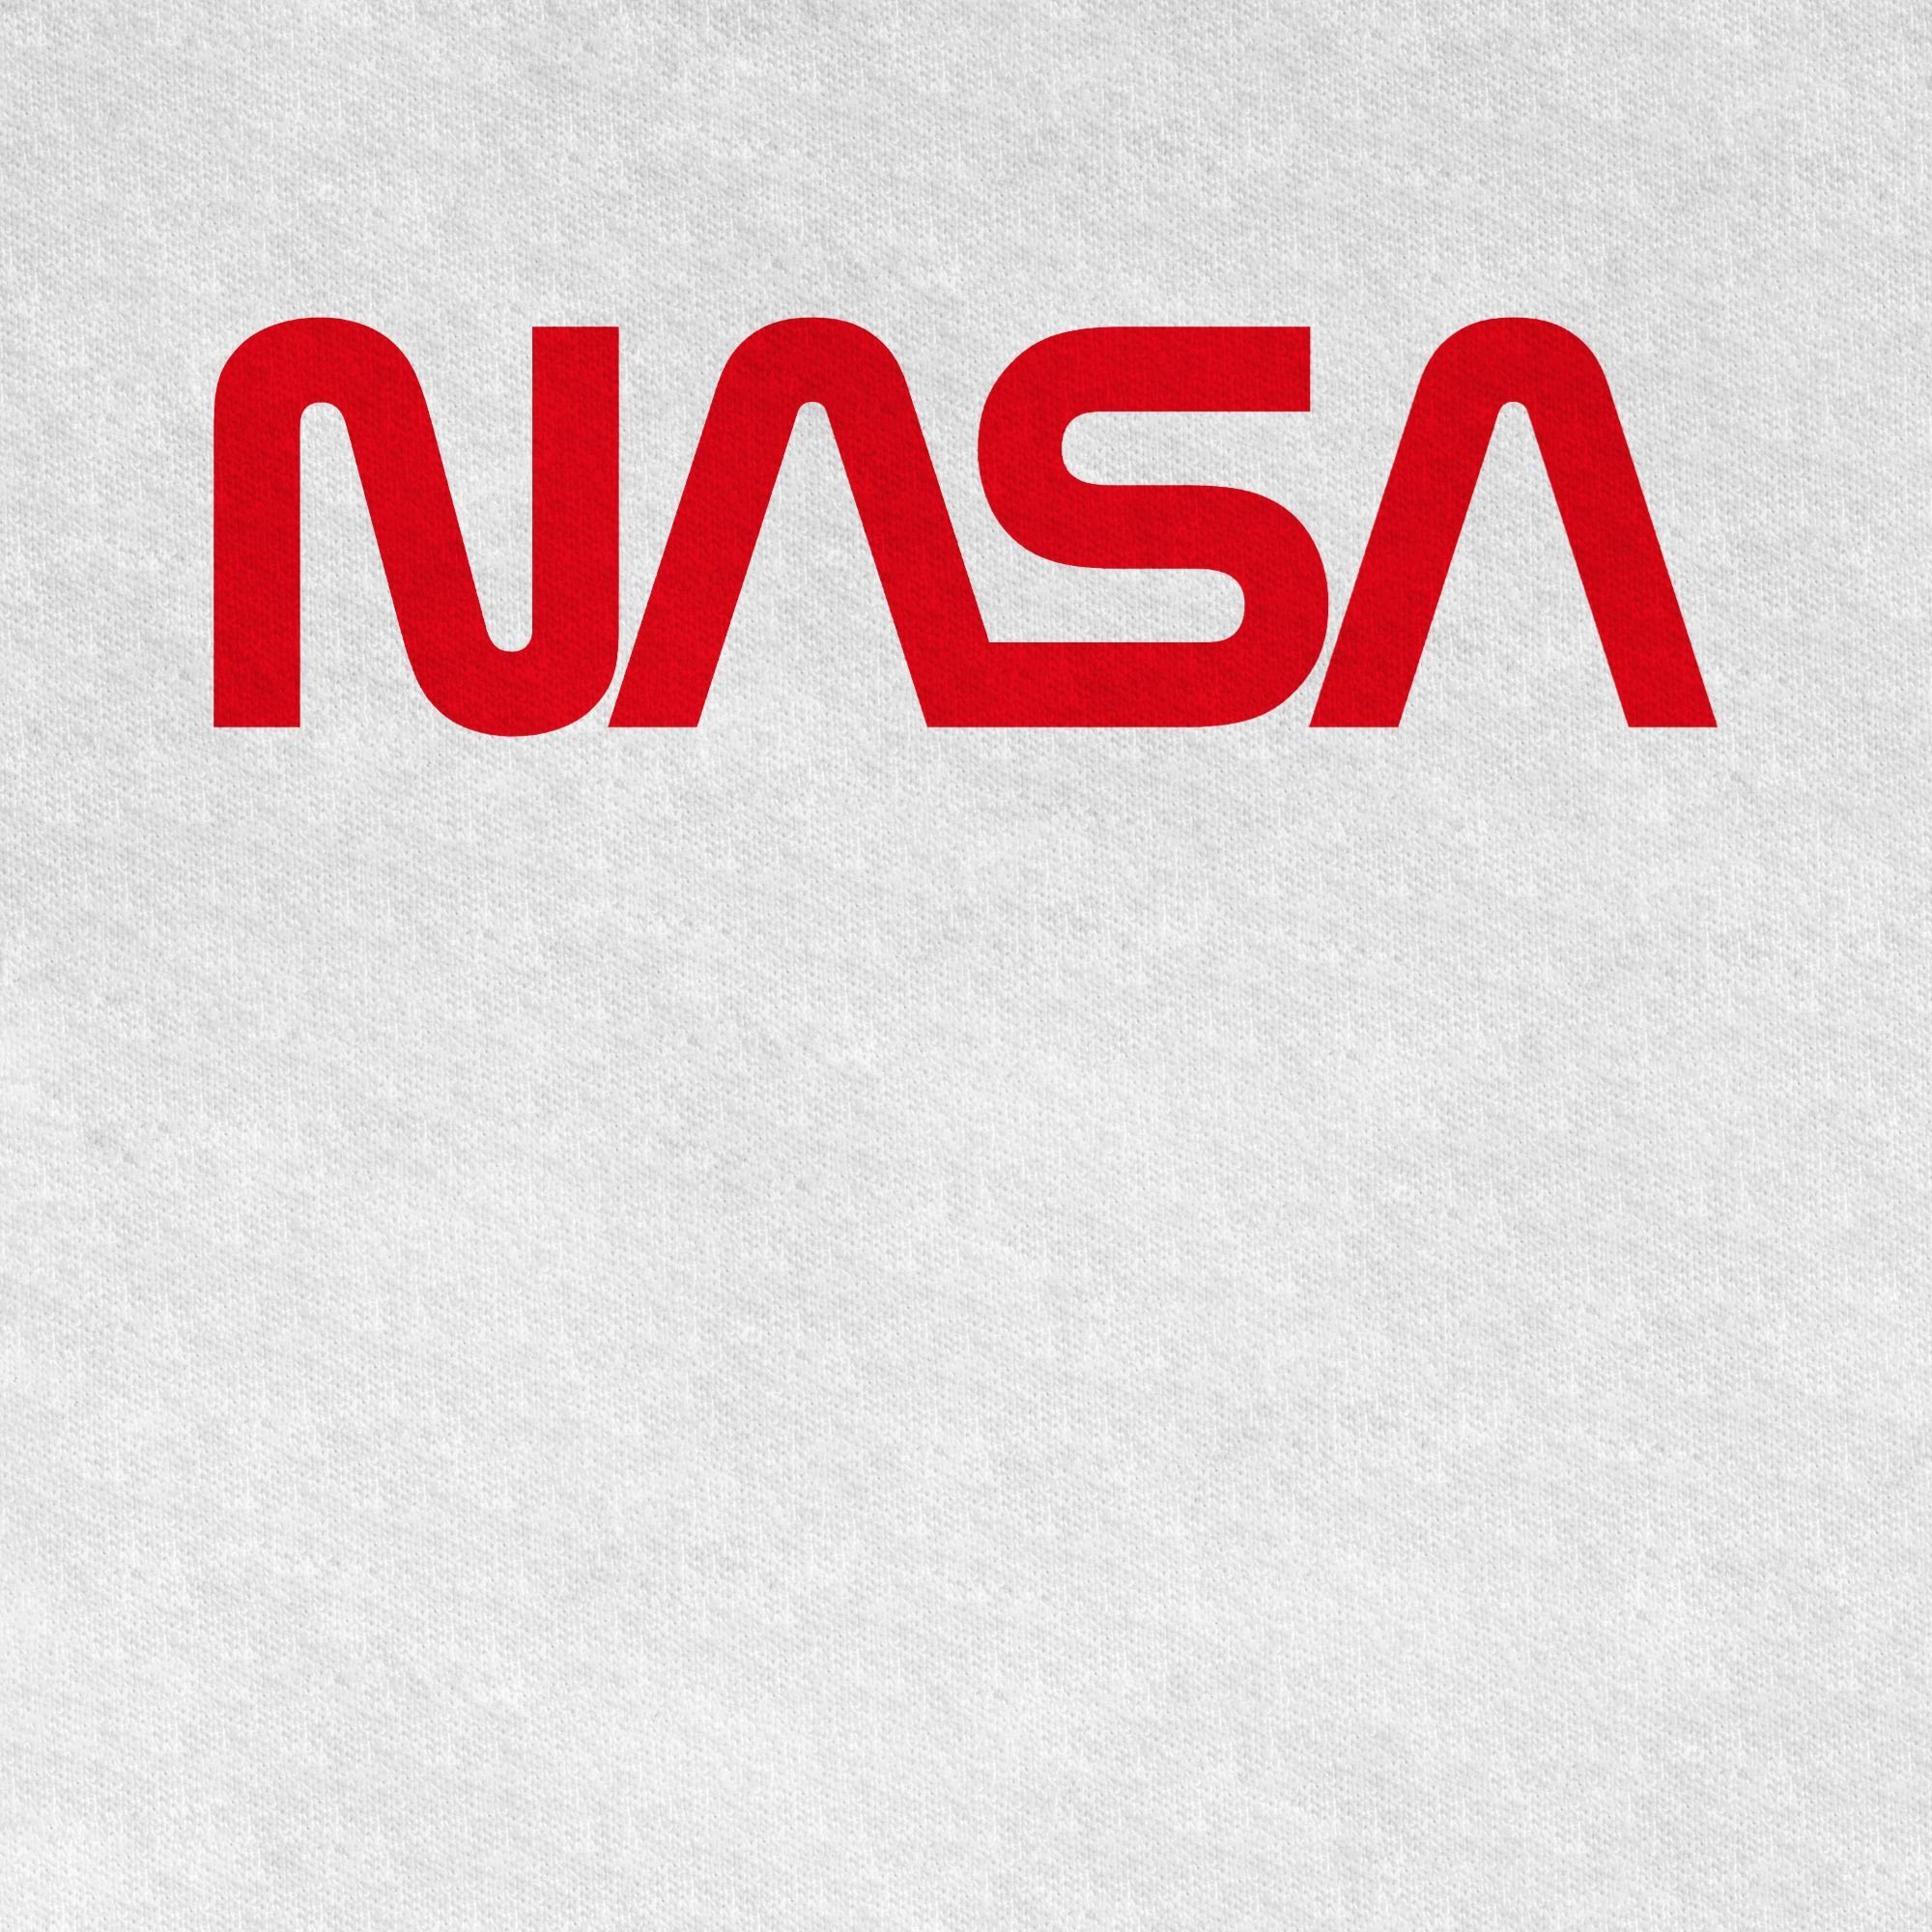 3 Astronaut Co T-Shirt - Mondlandung Nasa Shirtracer Weltraum Kinderkleidung Weiß und Raumfahrt